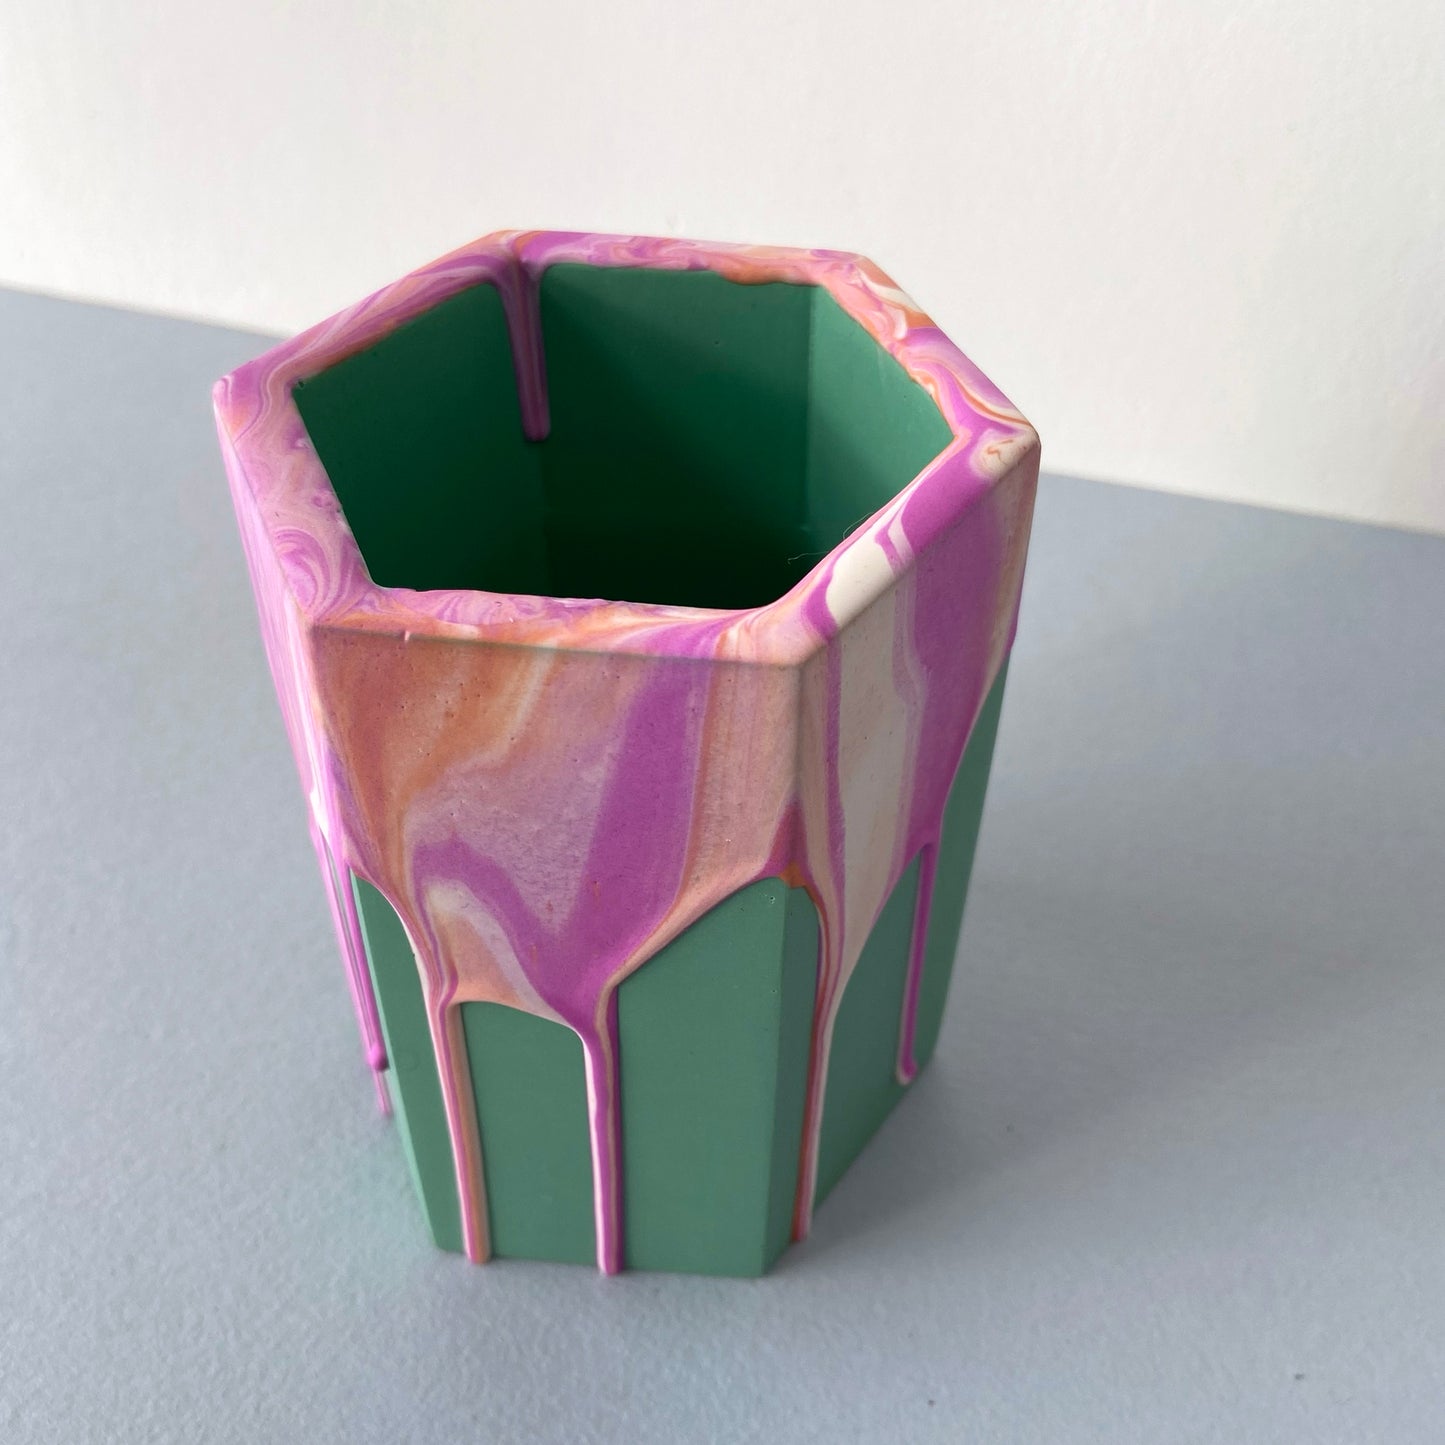 Hexagon pen pot / dried flower vase in drippy pink + coral